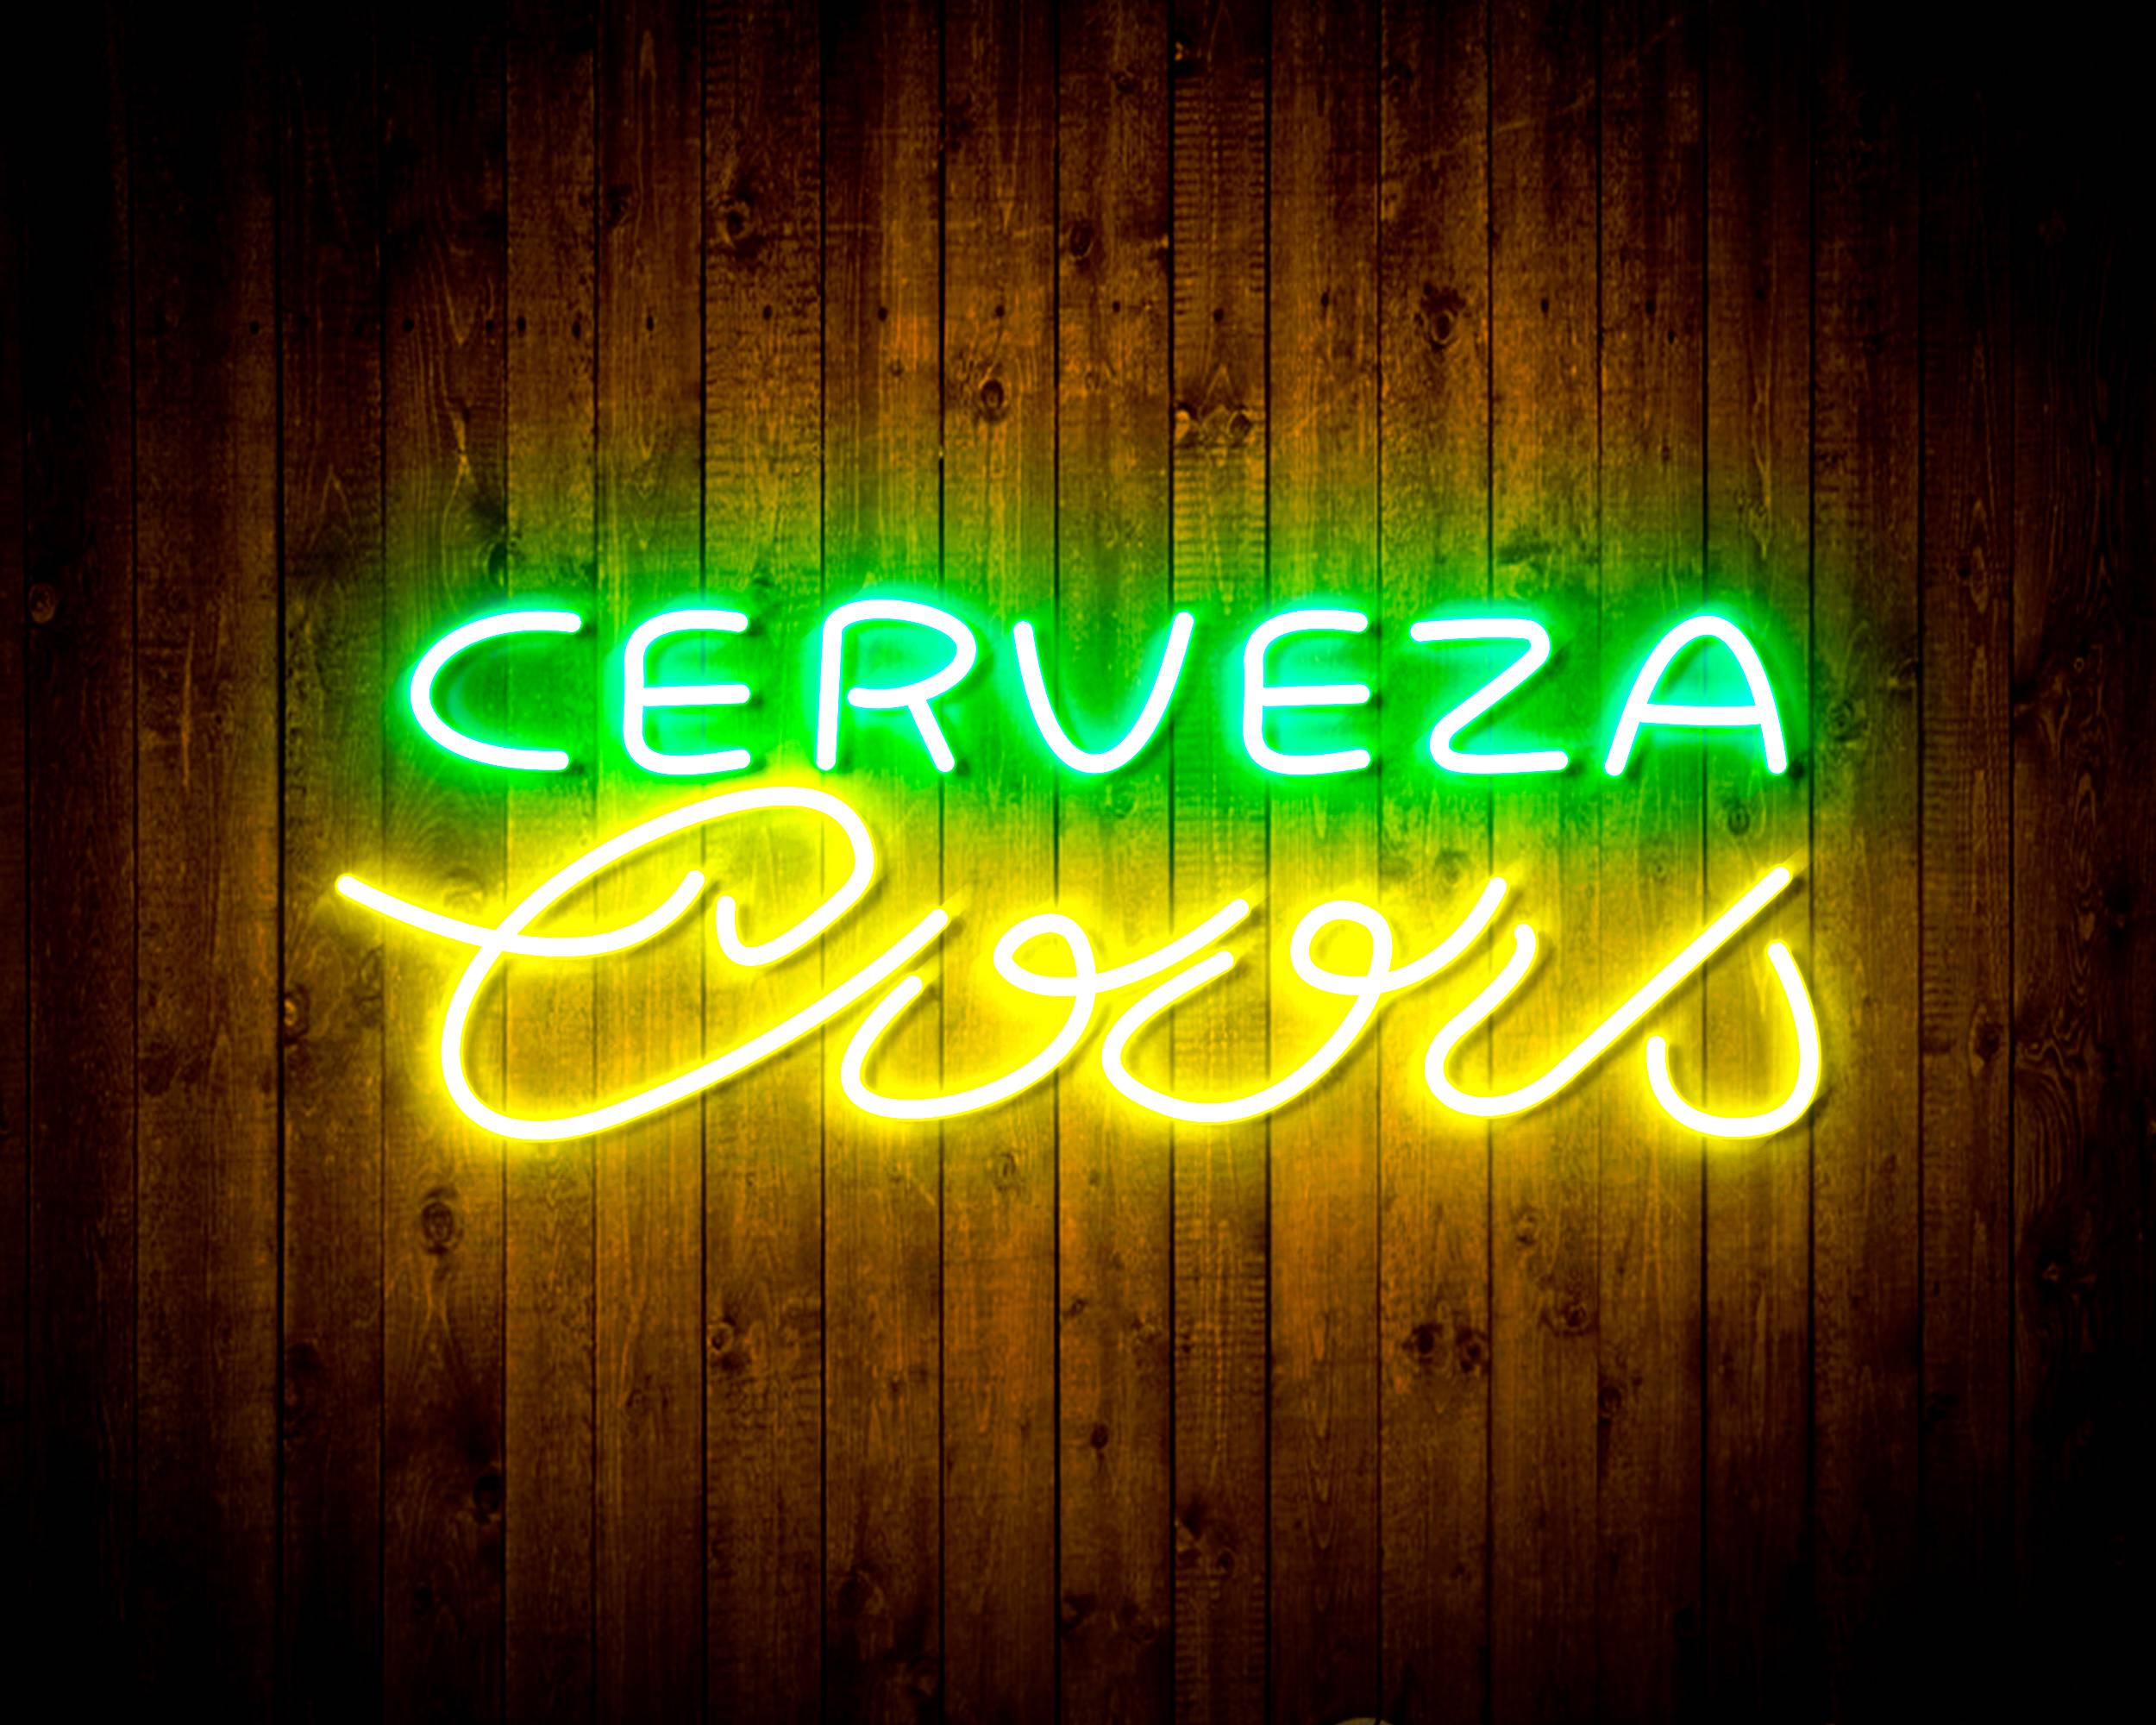 Cerveza Coors Bar Neon LED Sign